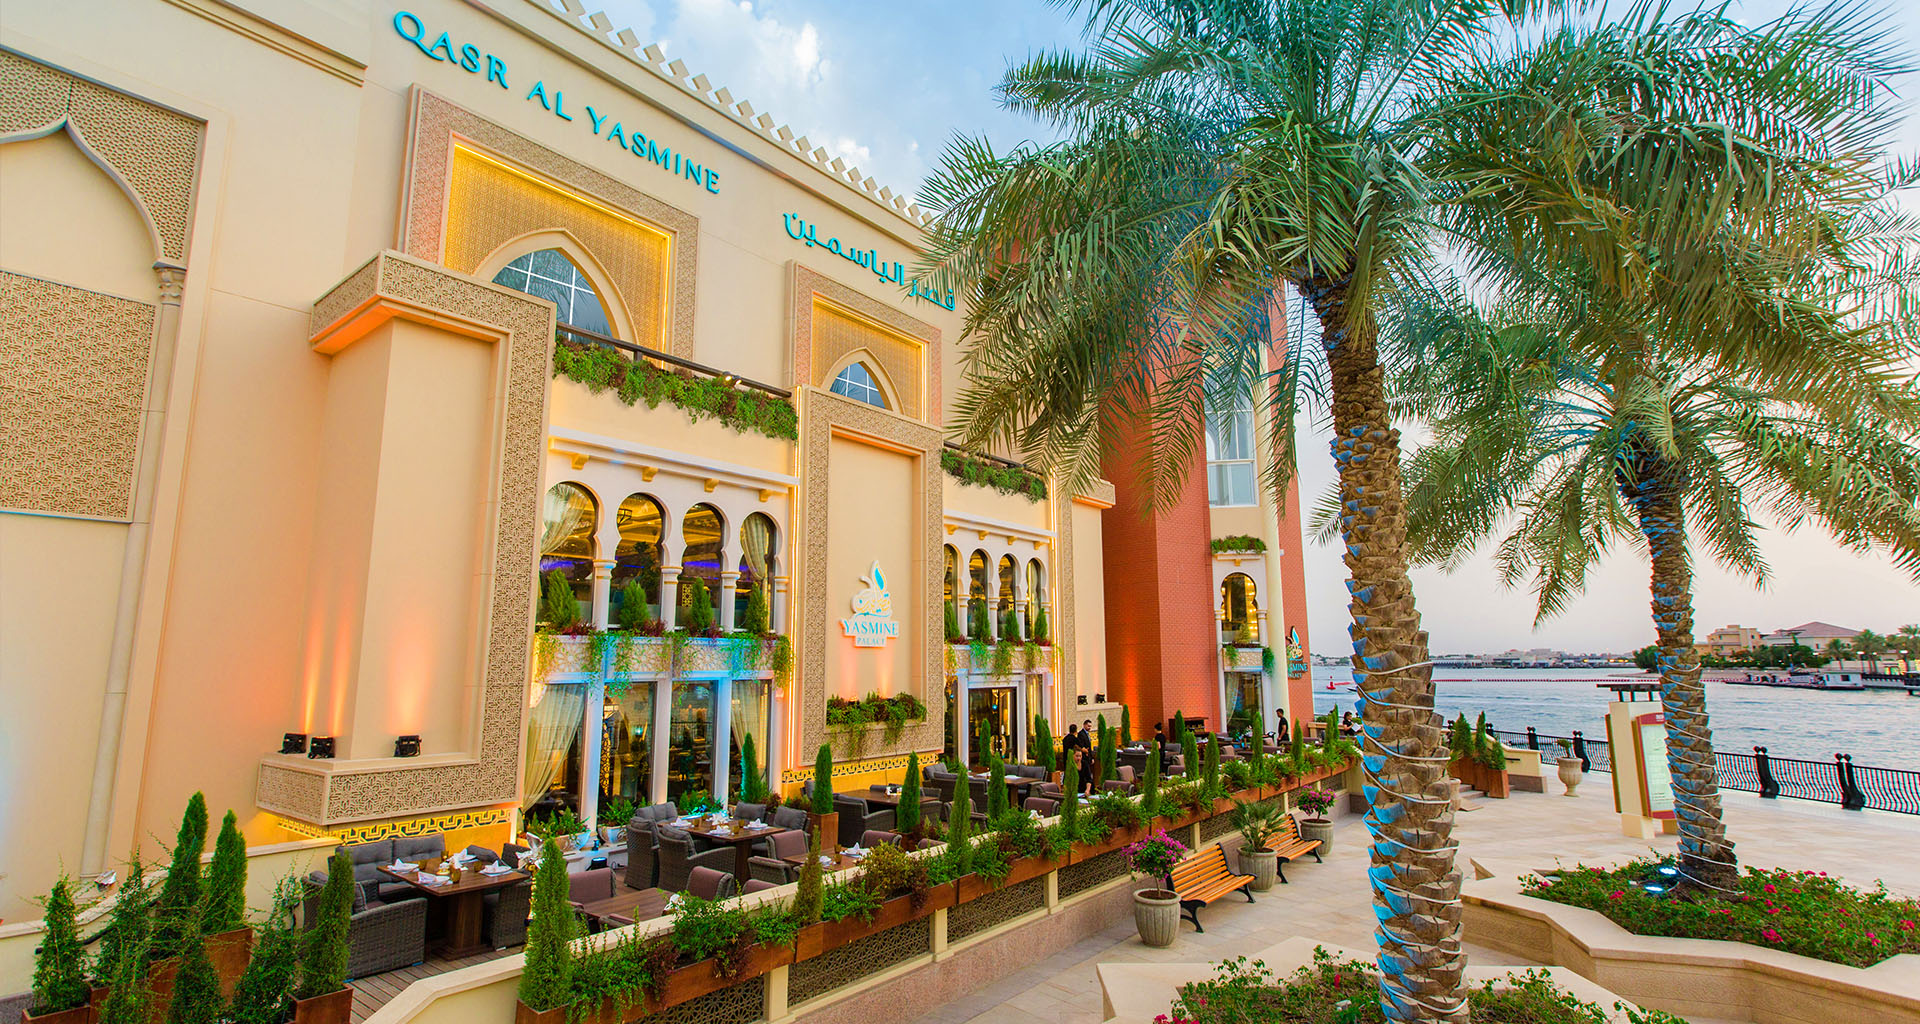 , TERRACE, YASMINE PALACE - مطعم قصر الياسمين